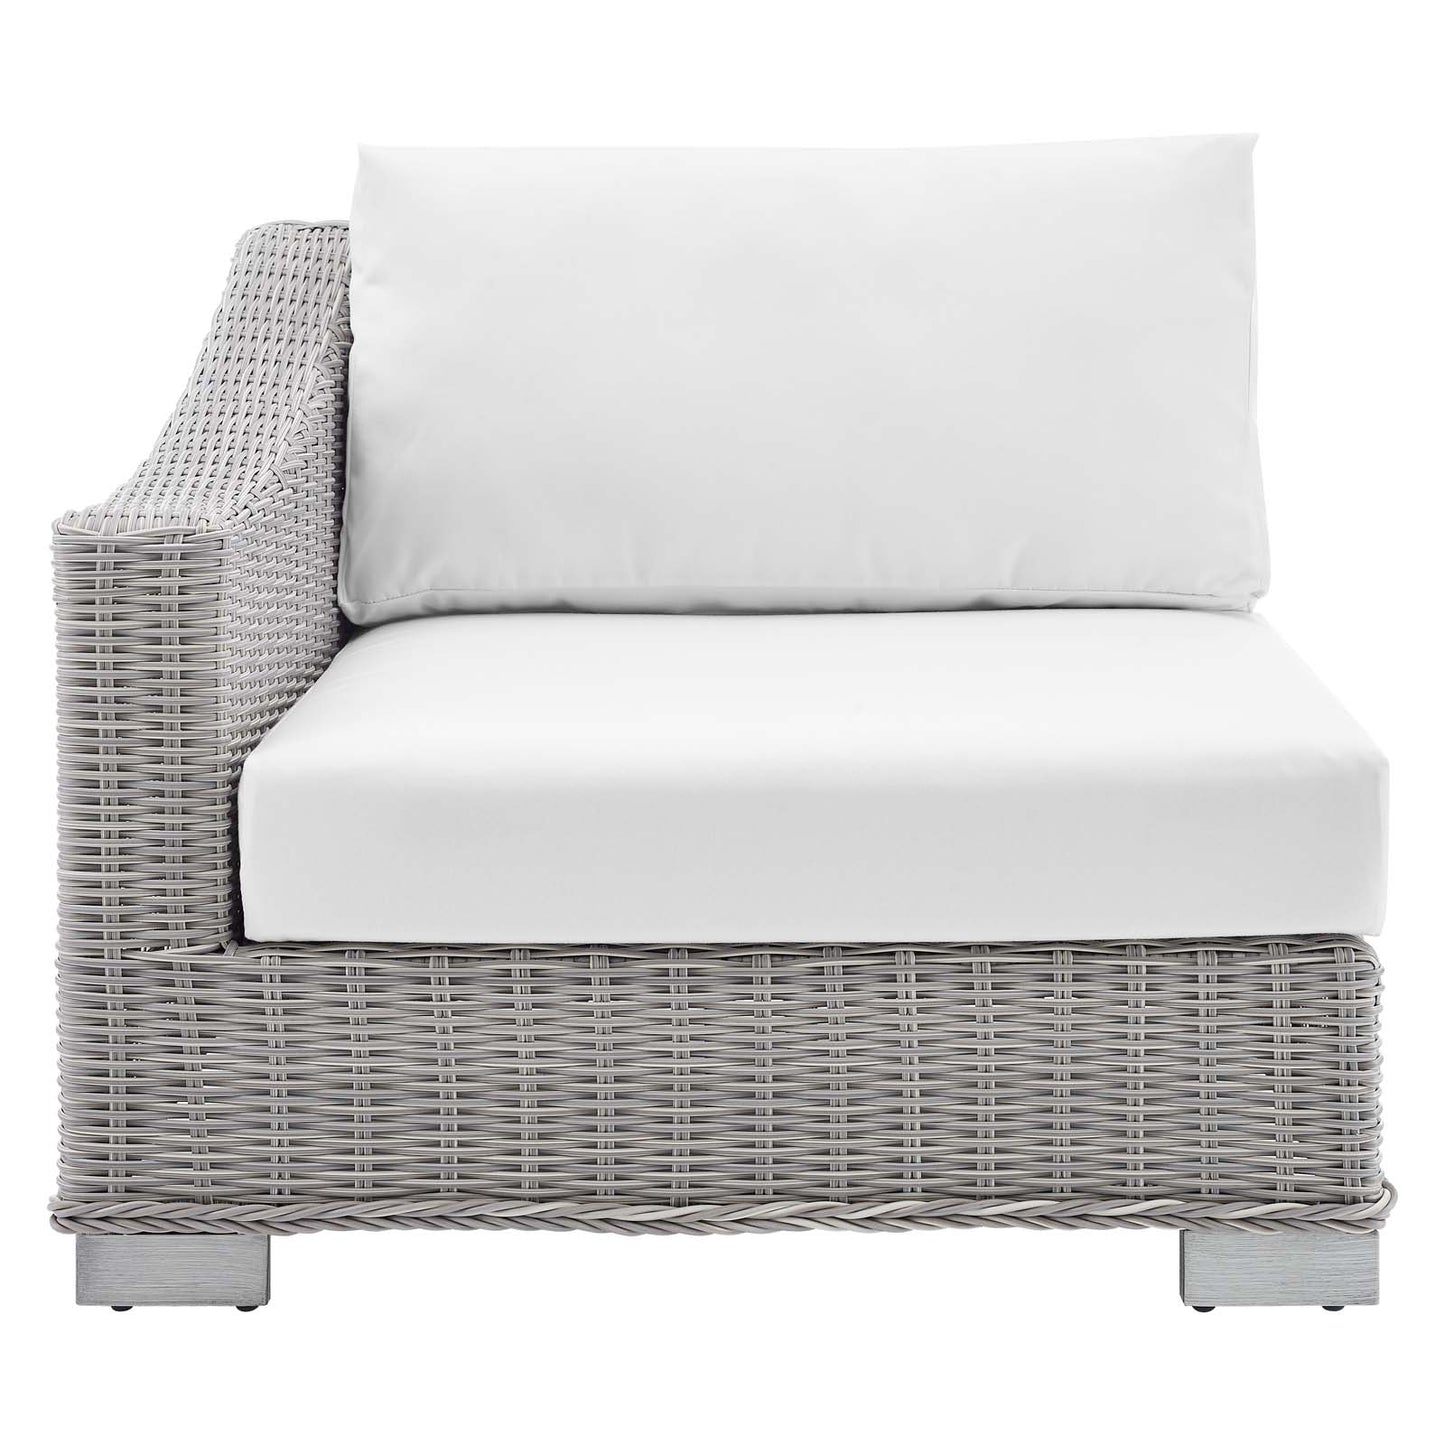 Conway Sunbrella® Outdoor Patio Wicker Rattan Left-Arm Chair Light Gray White EEI-3975-LGR-WHI